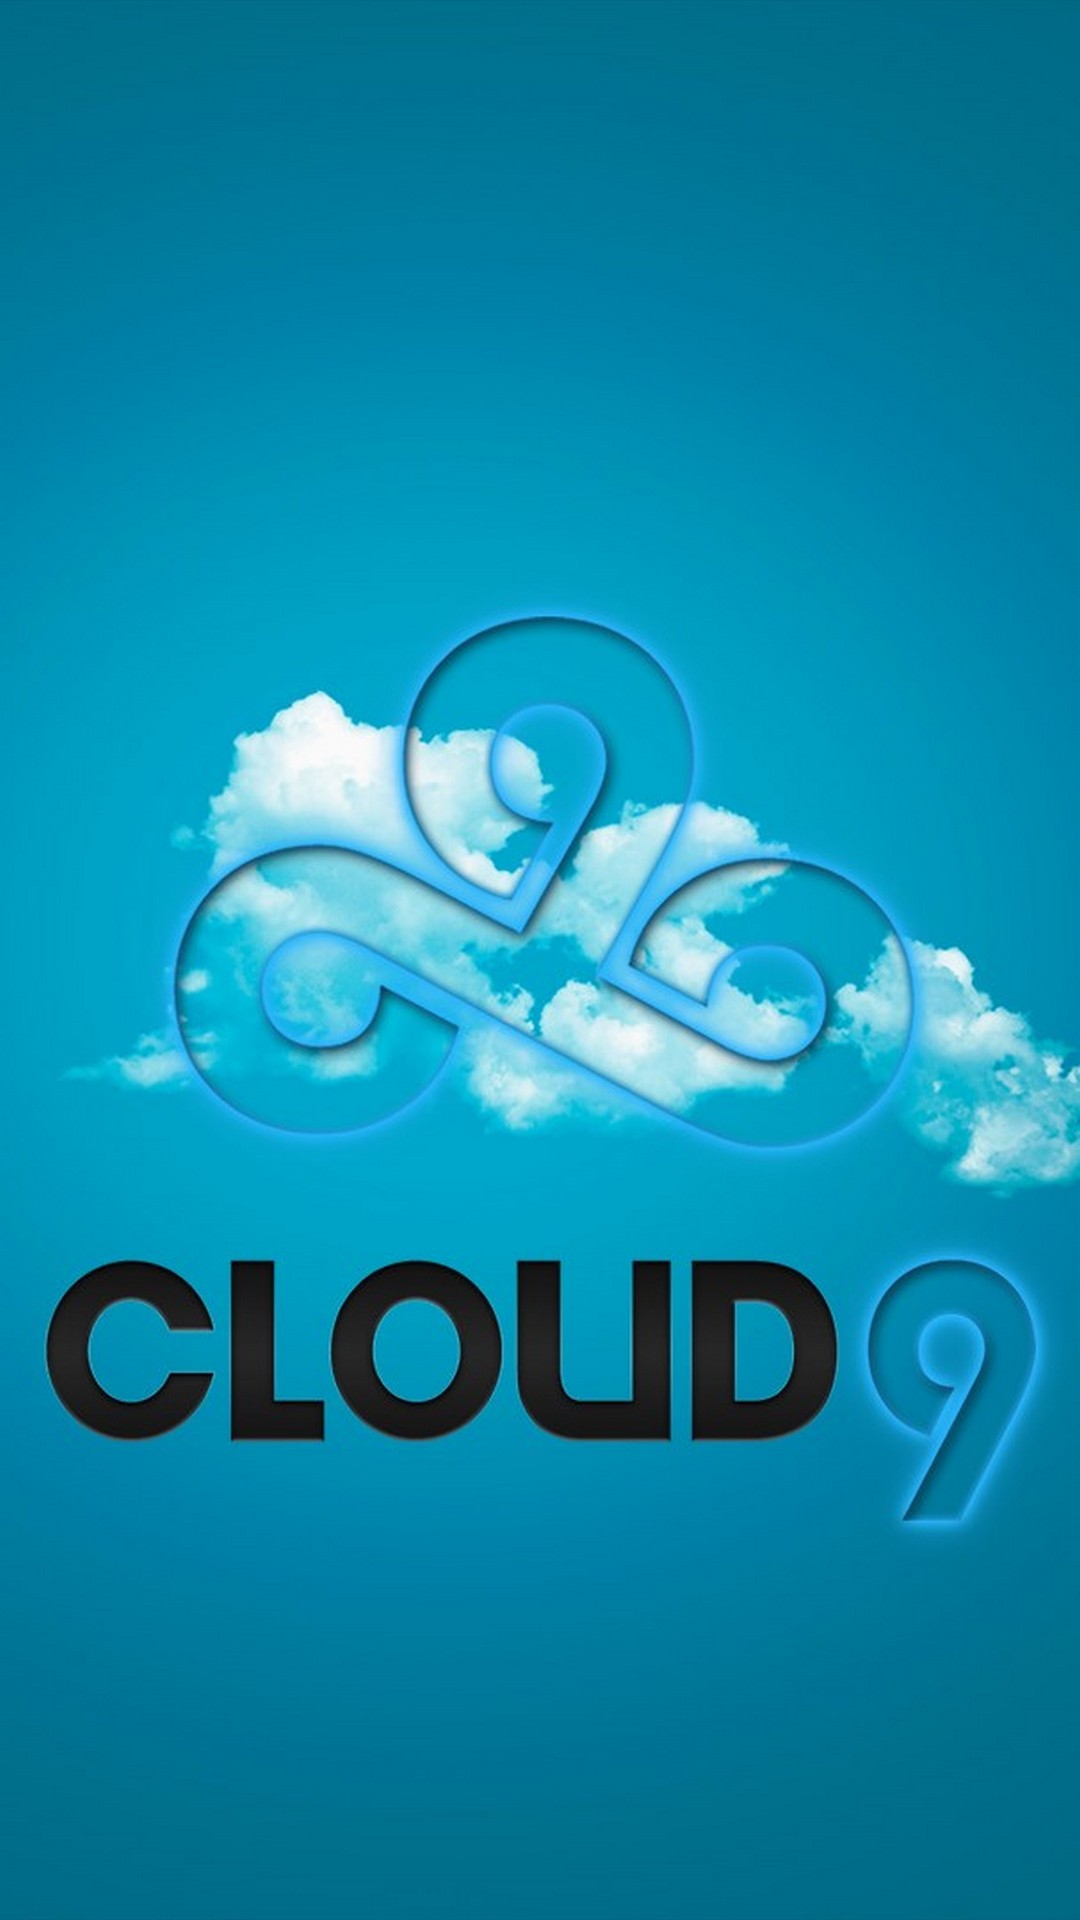 nube 9 fondo de pantalla para iphone,agua,texto,azul,fuente,turquesa